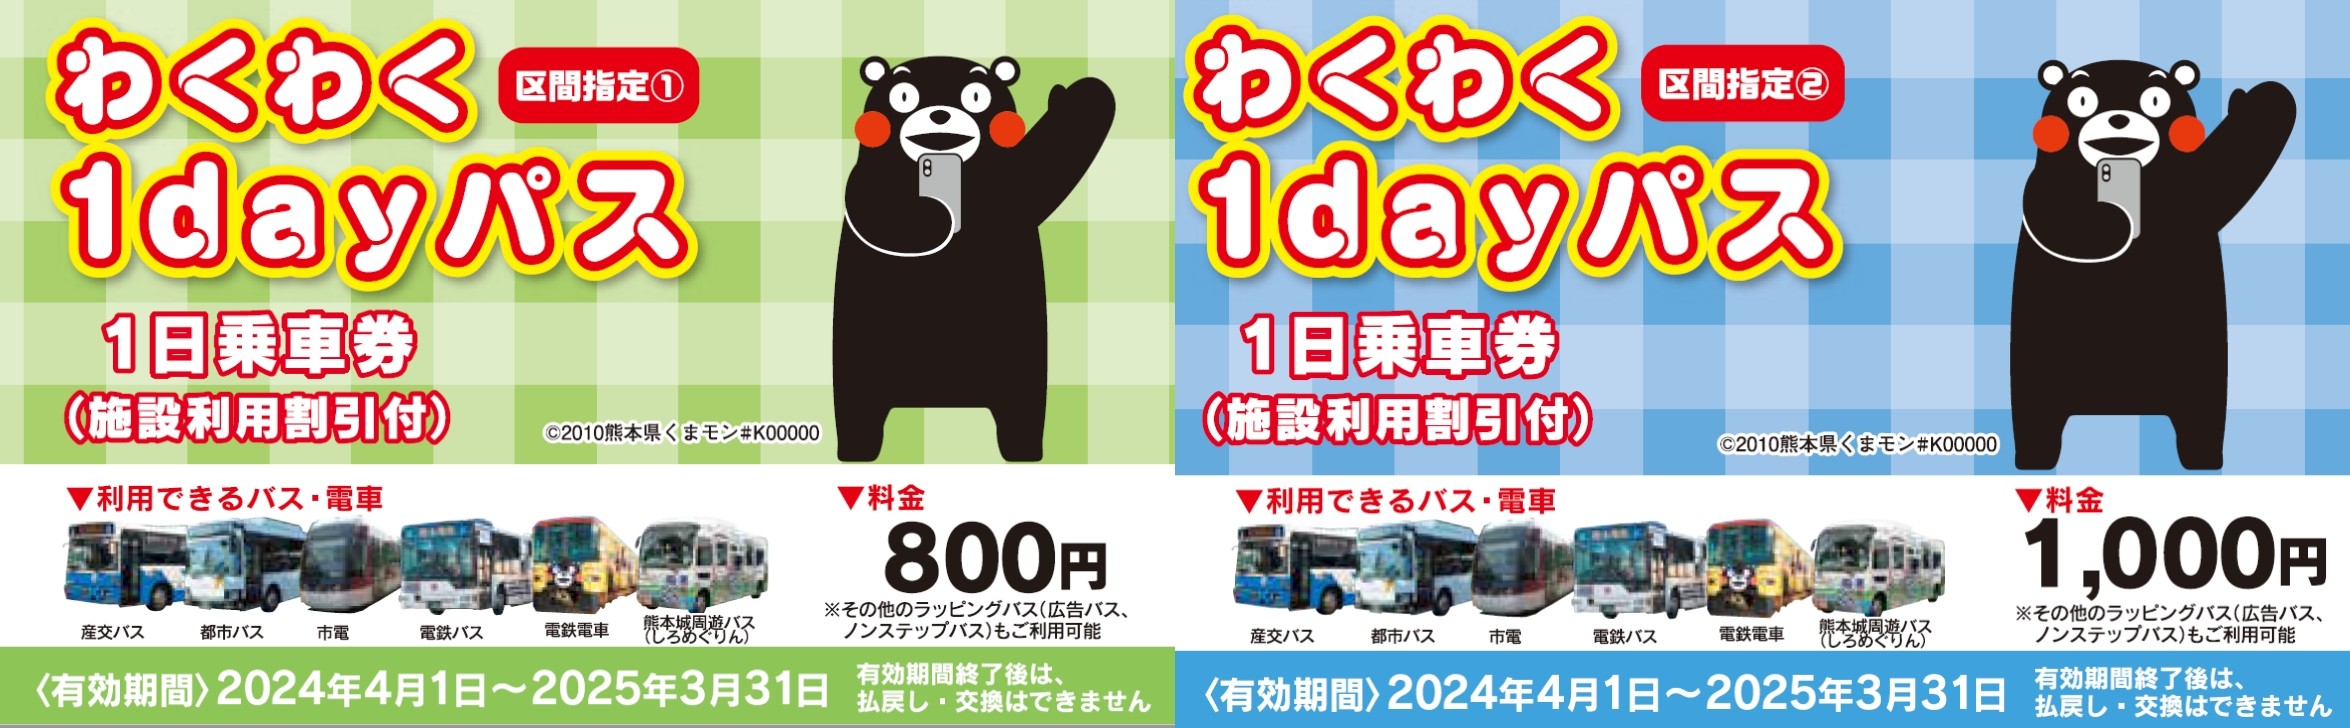 One-day pass for both train and bus (Waku Waku 1day Pass)